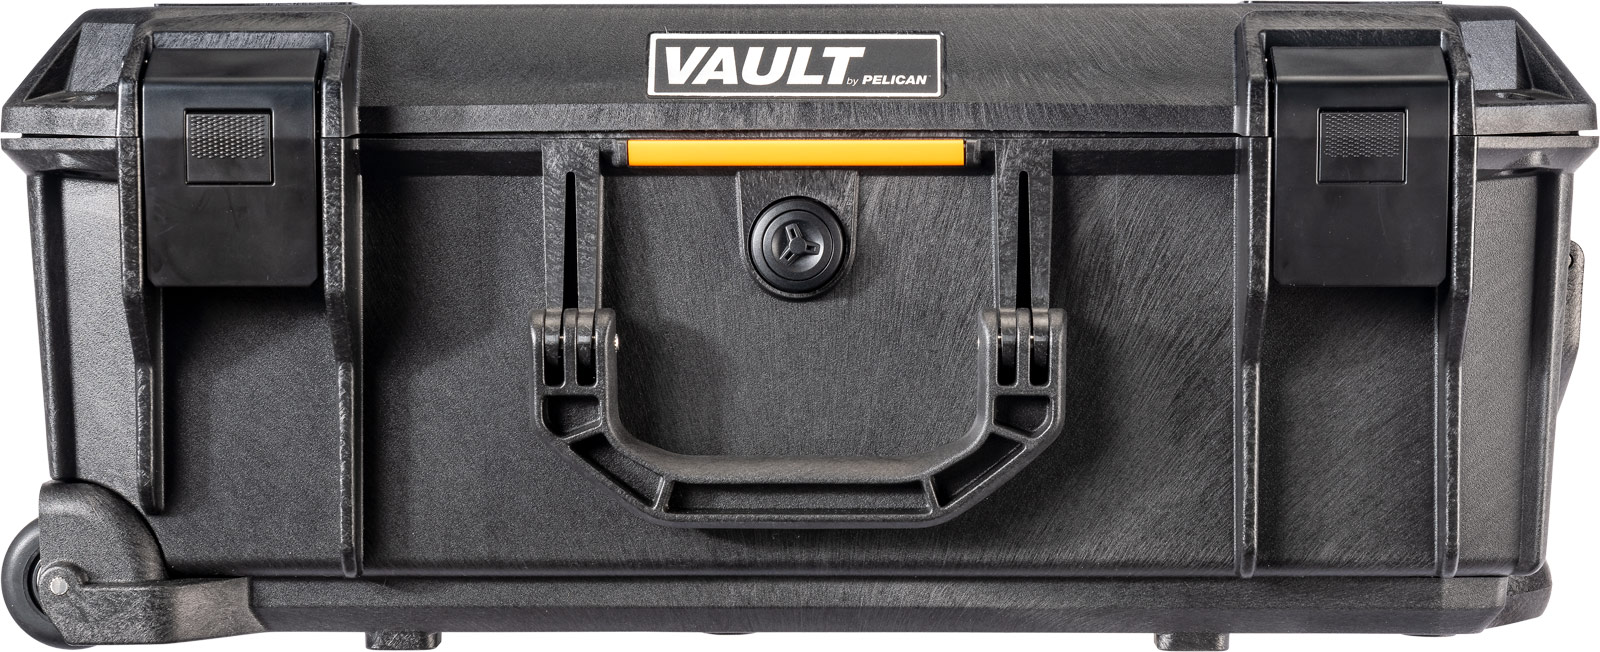 pelican vault v525 black hard case